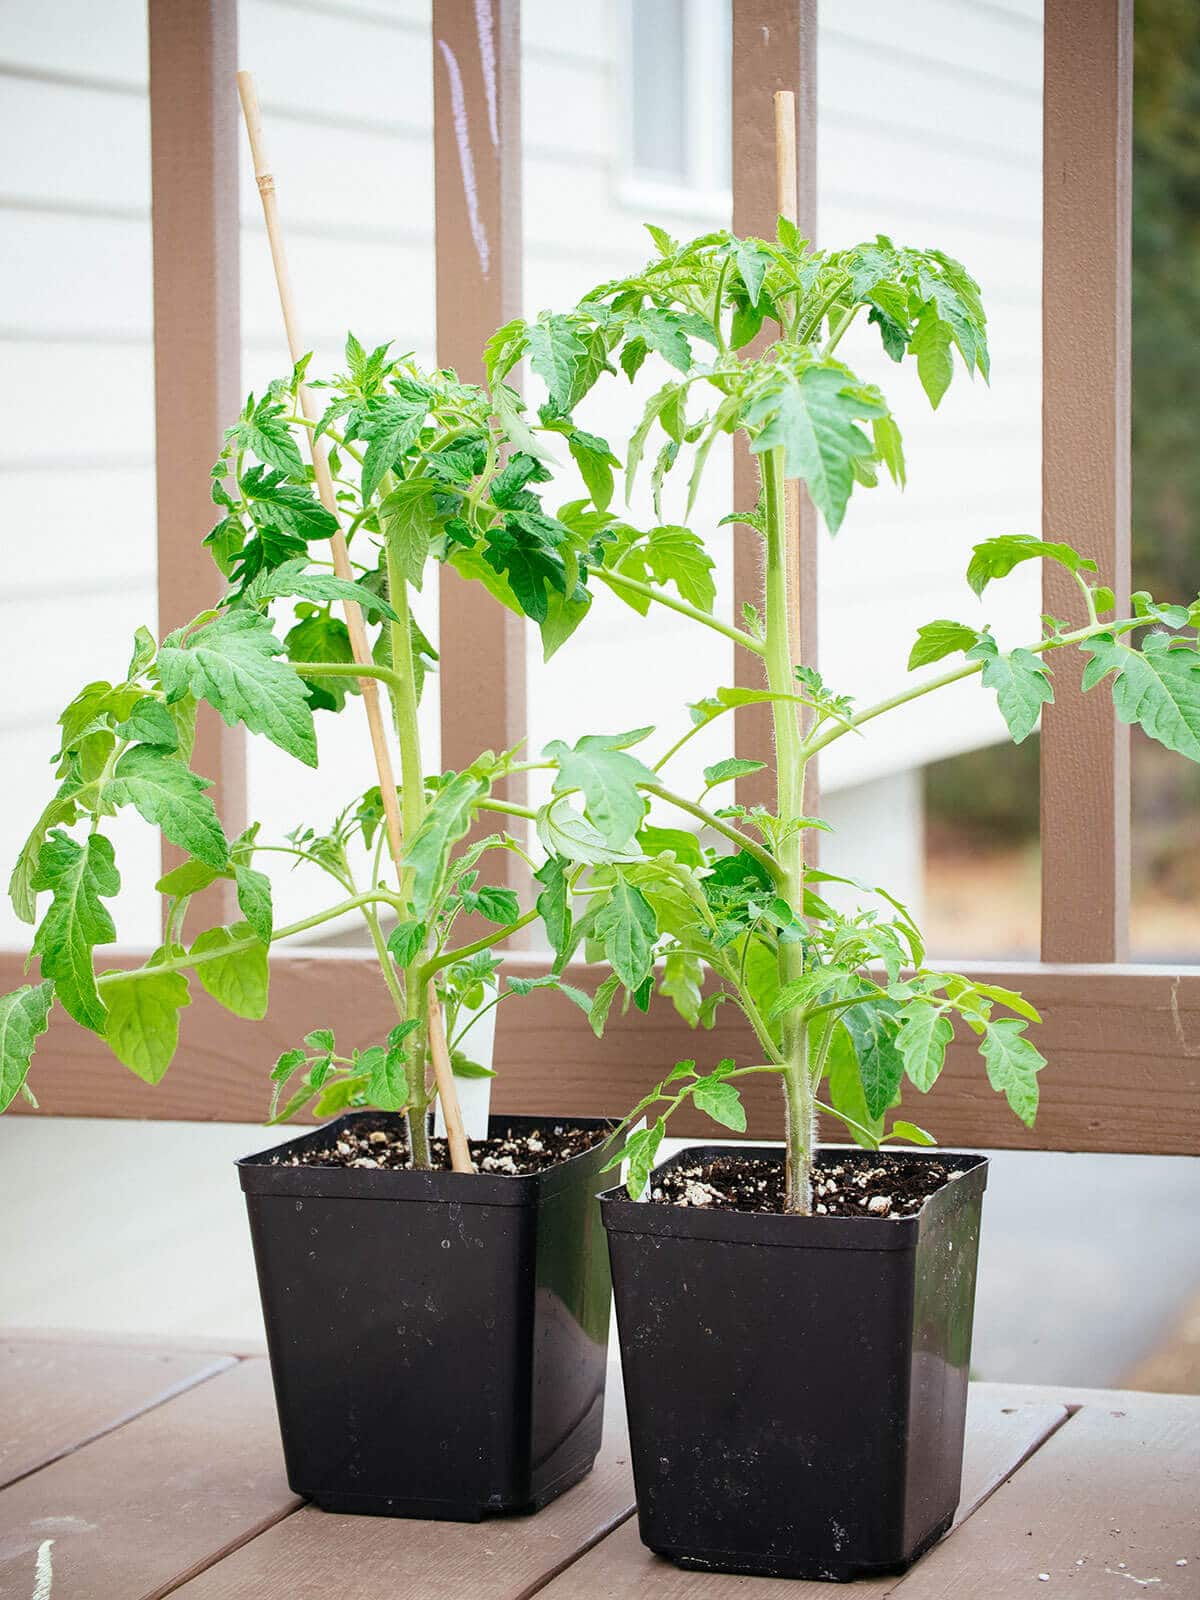 Transplant tomatoes for more vigorous growth